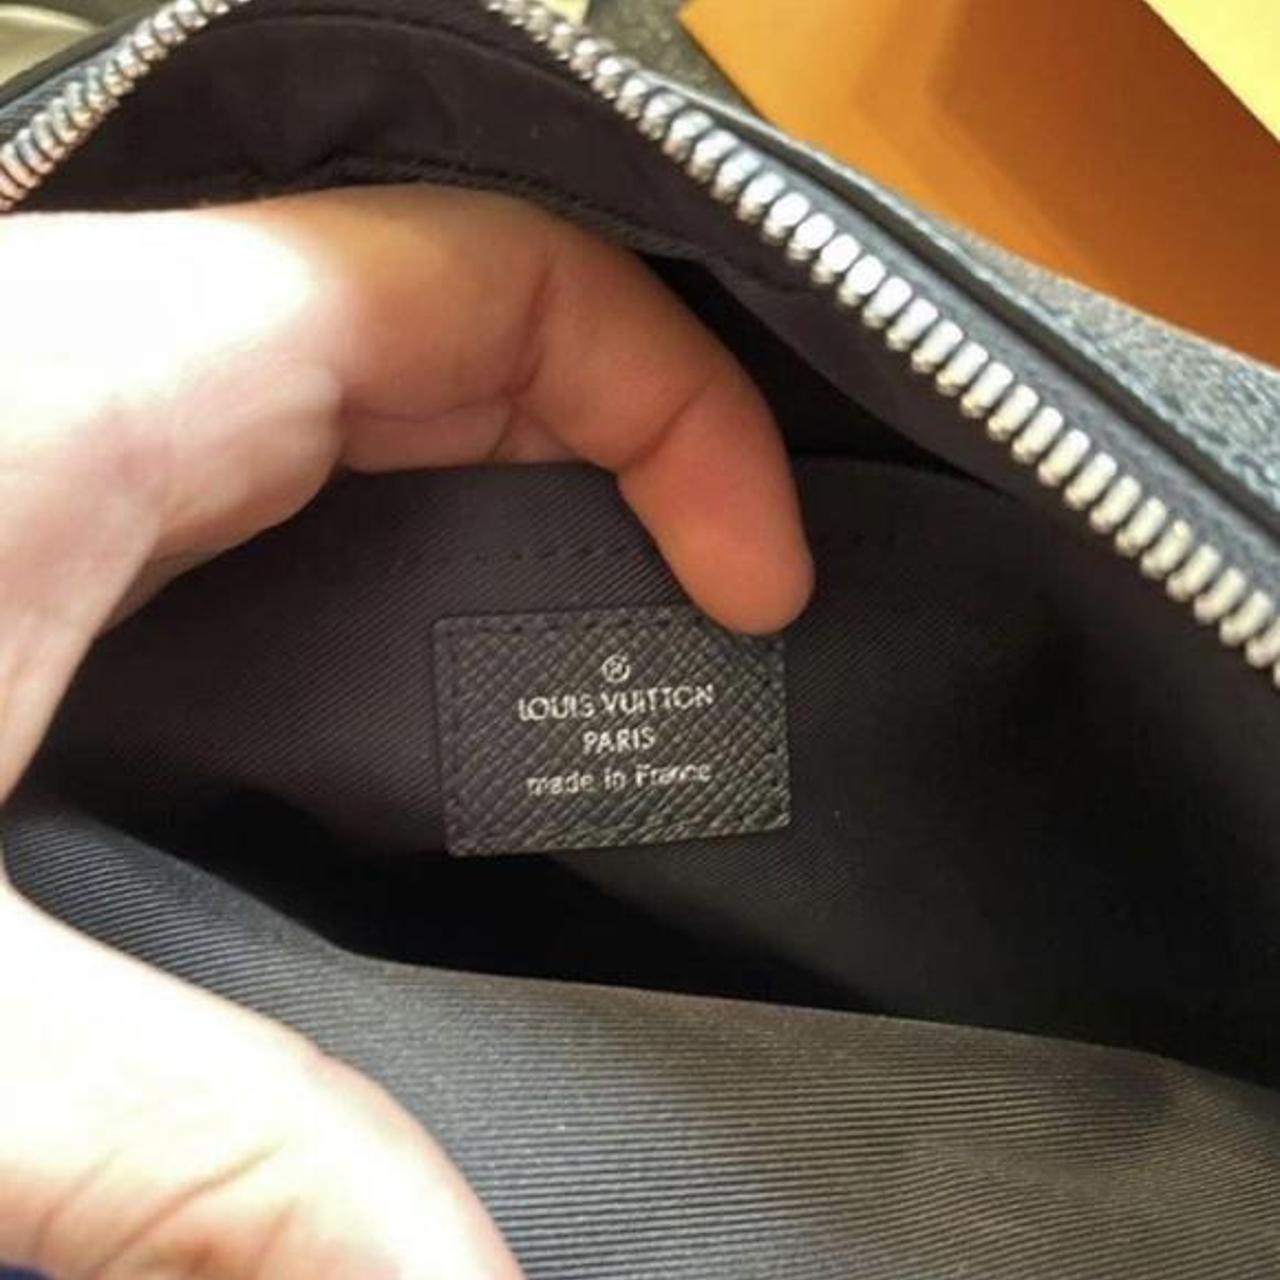 Louie Vuitton Inventeur Messenger Bag Brand New No - Depop